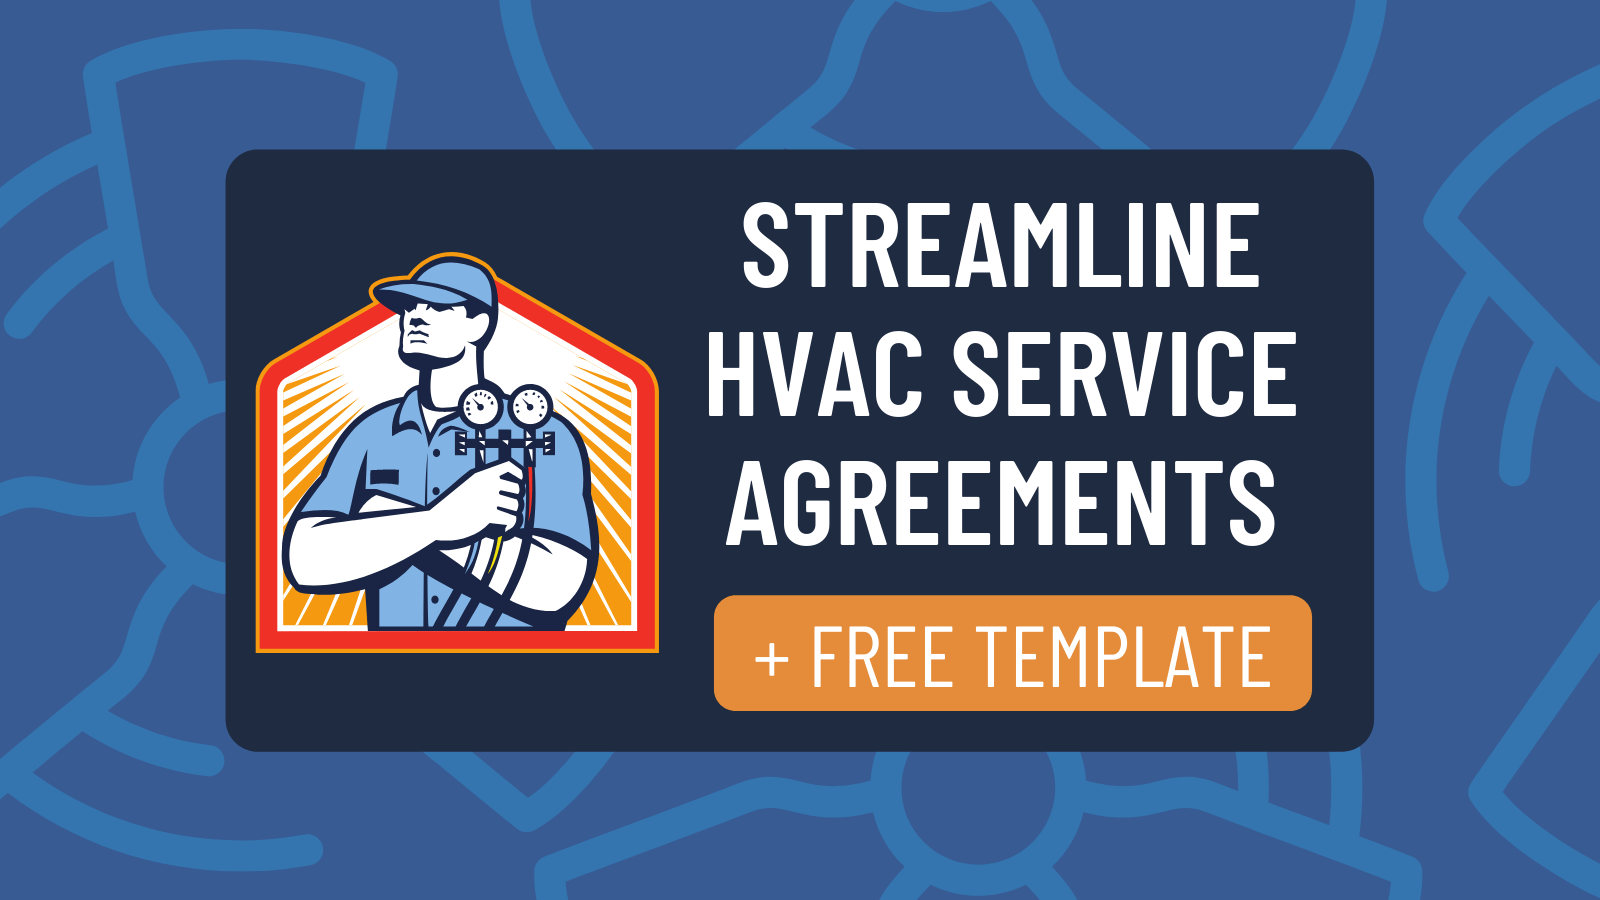 hvac service agreement template